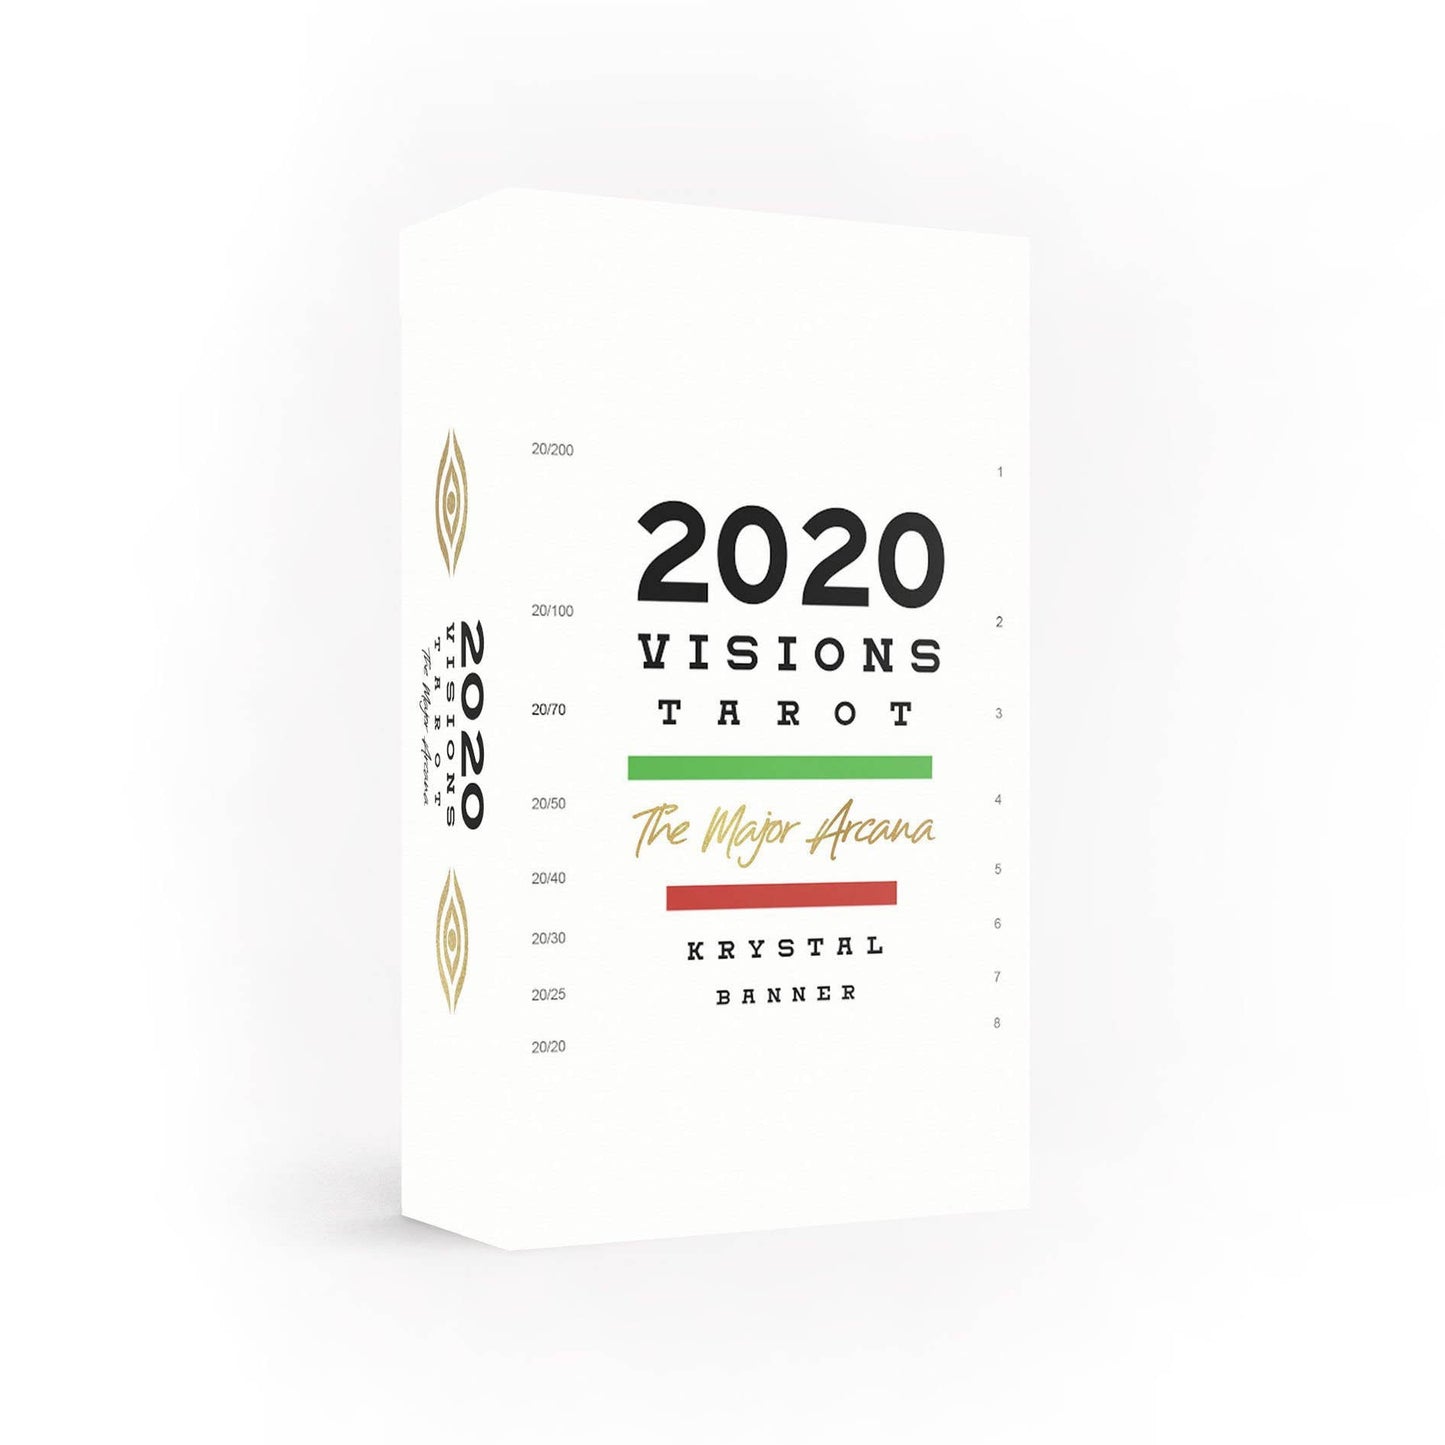 2020 Visions Tarot: The Major Arcana